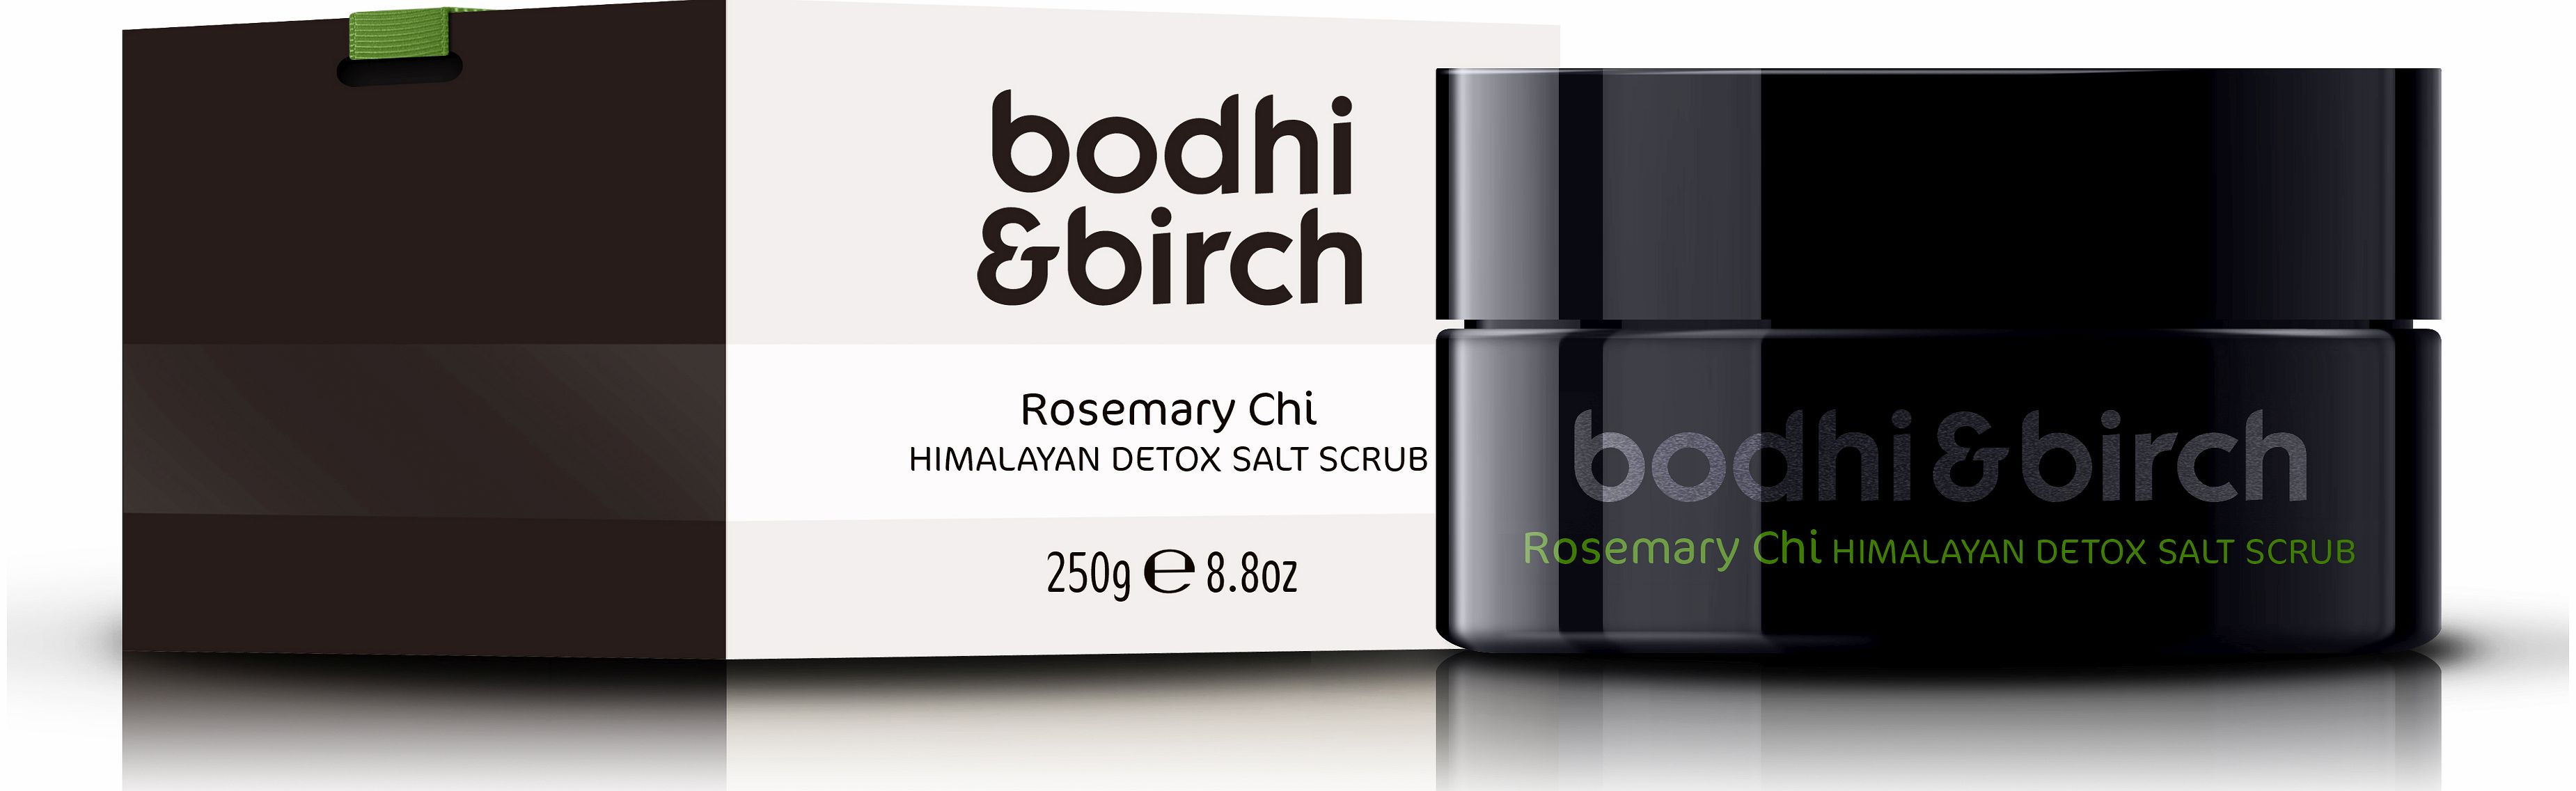 Bodhi & Birch Rosemary Chi Himalayan Detox Salt